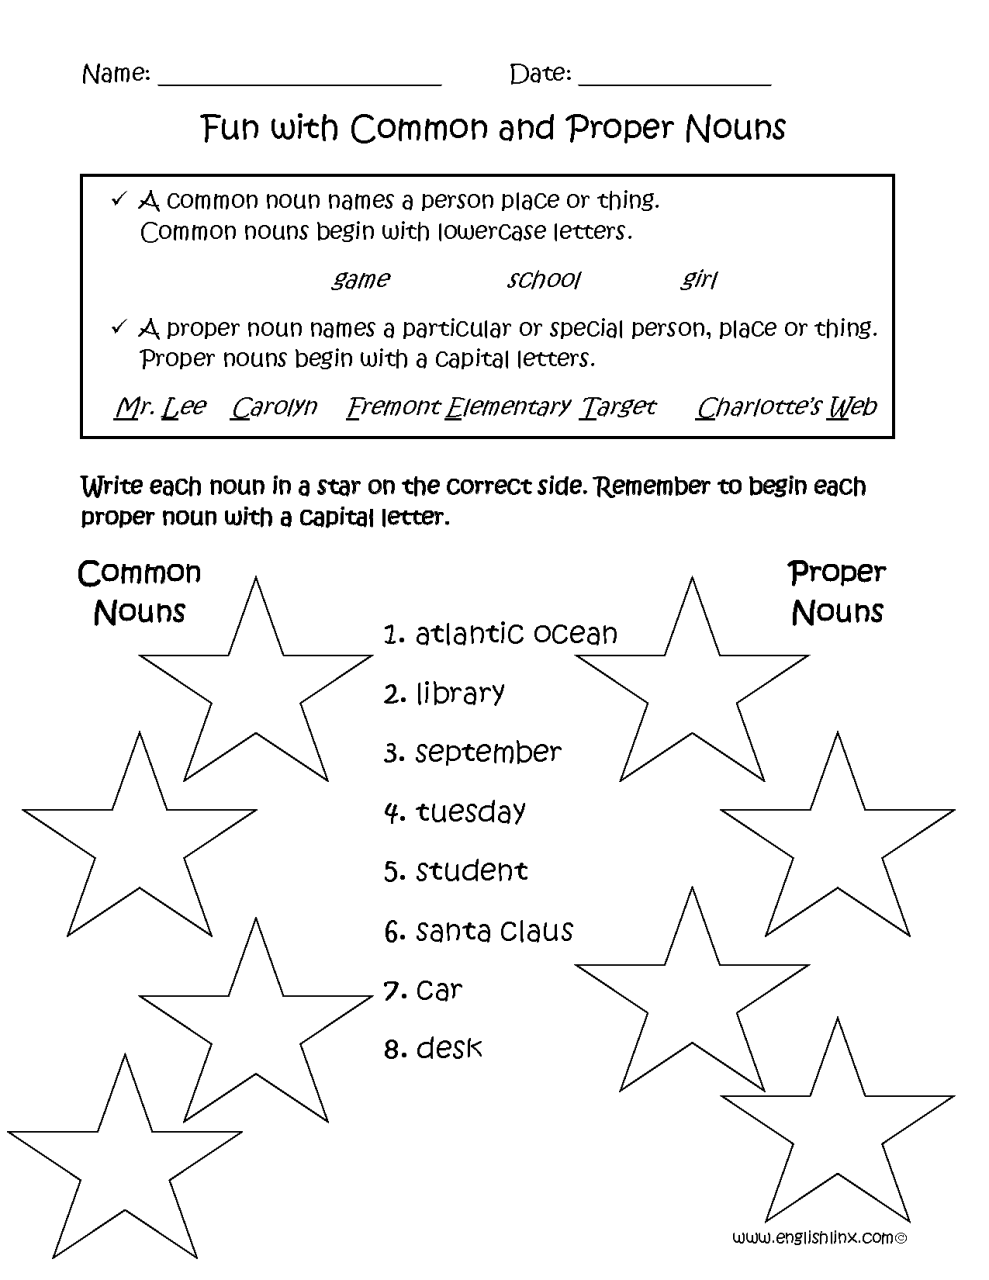 common-and-proper-nouns-worksheets-for-grade-2-kidsworksheetfun